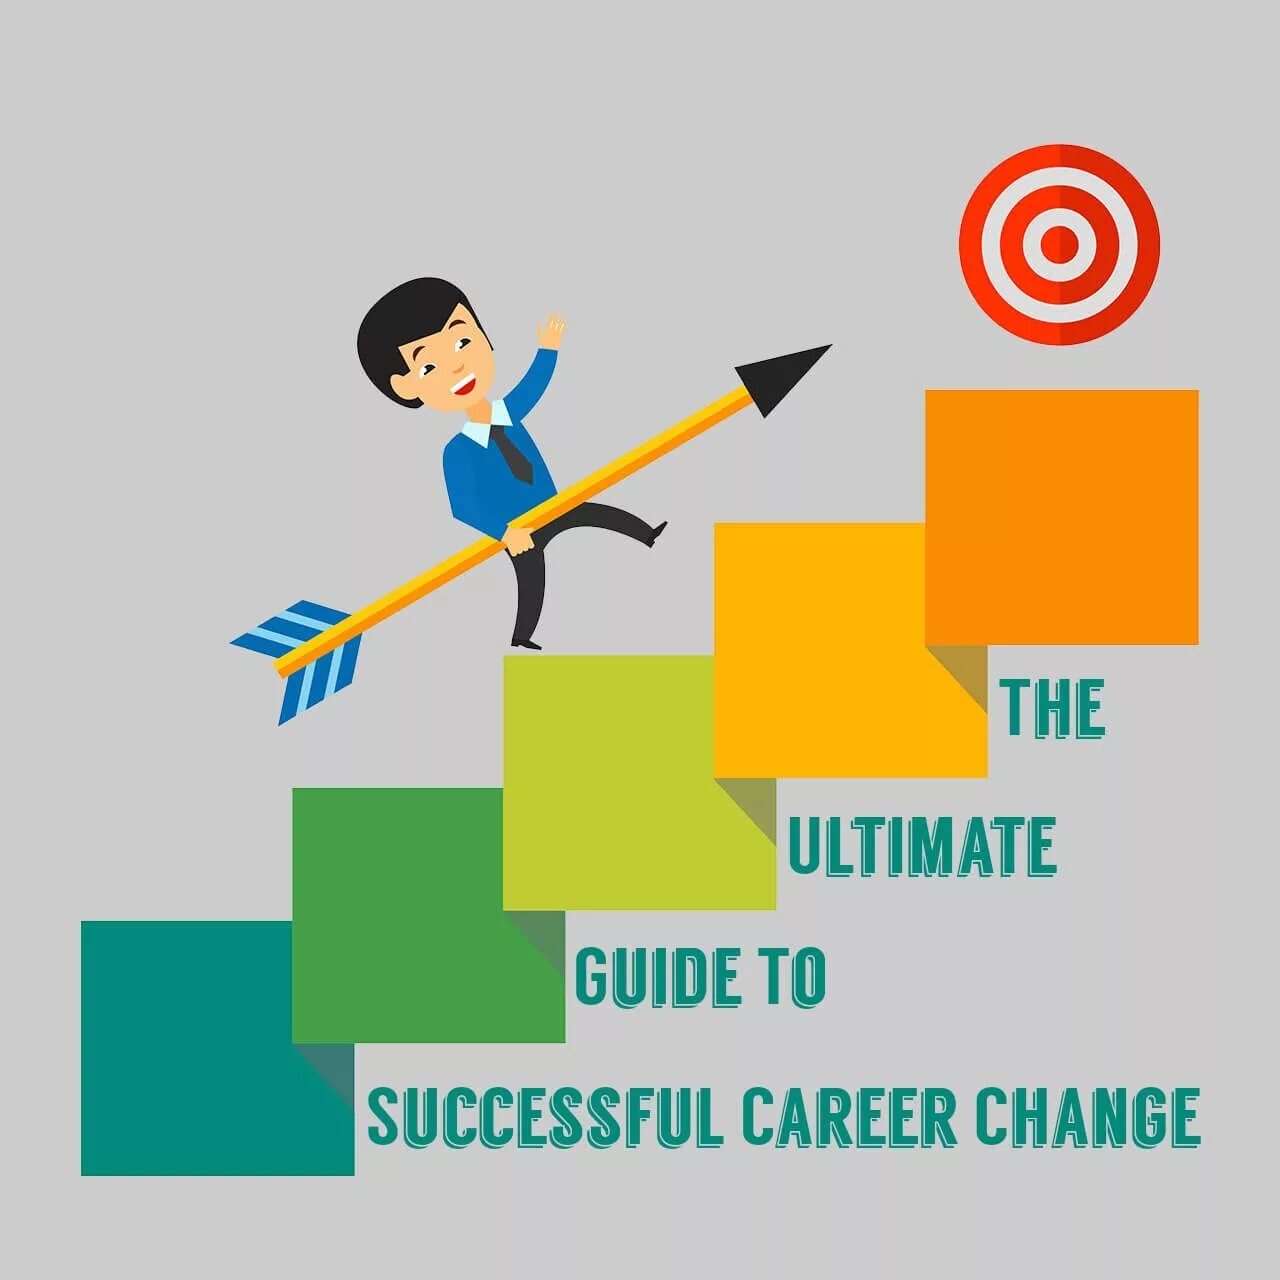 Successful careers. Successful картинка. How to be successful in career. Successful - картинки для презентаций. Career change.